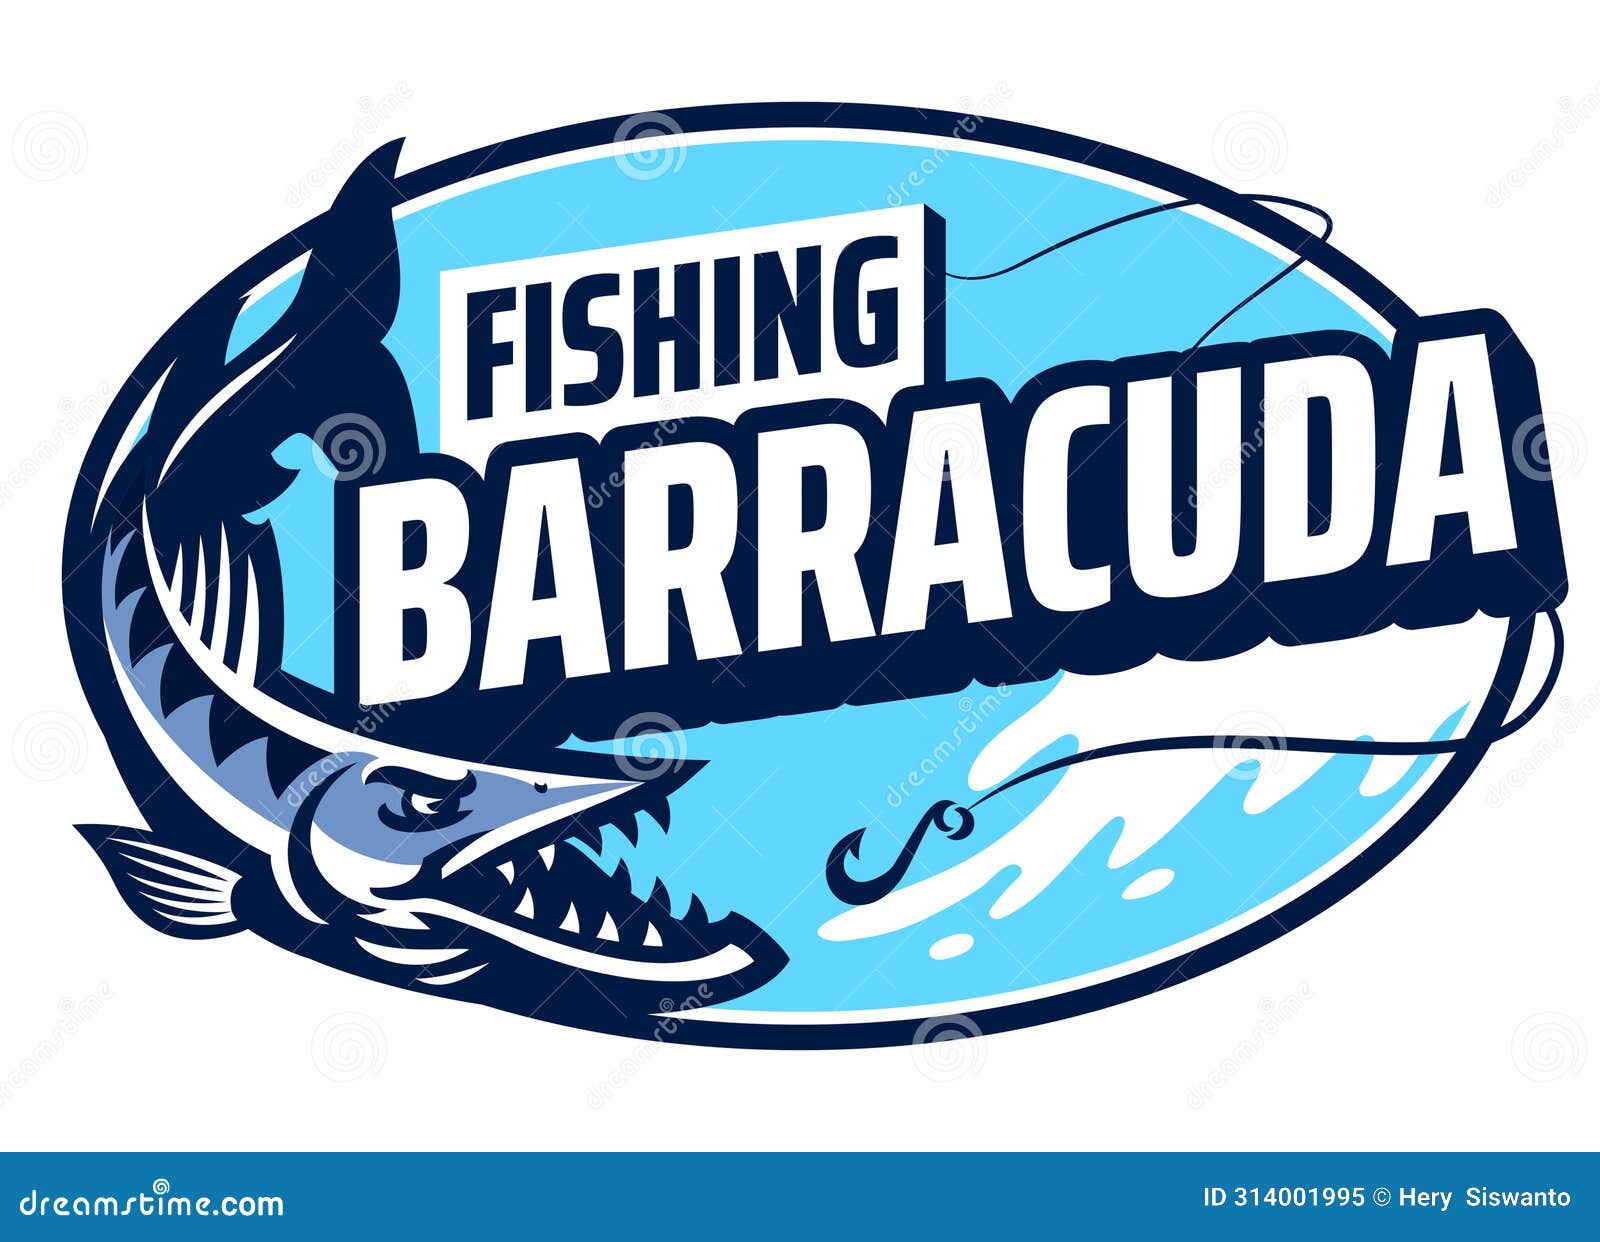 fishing barracuda mascot logo 